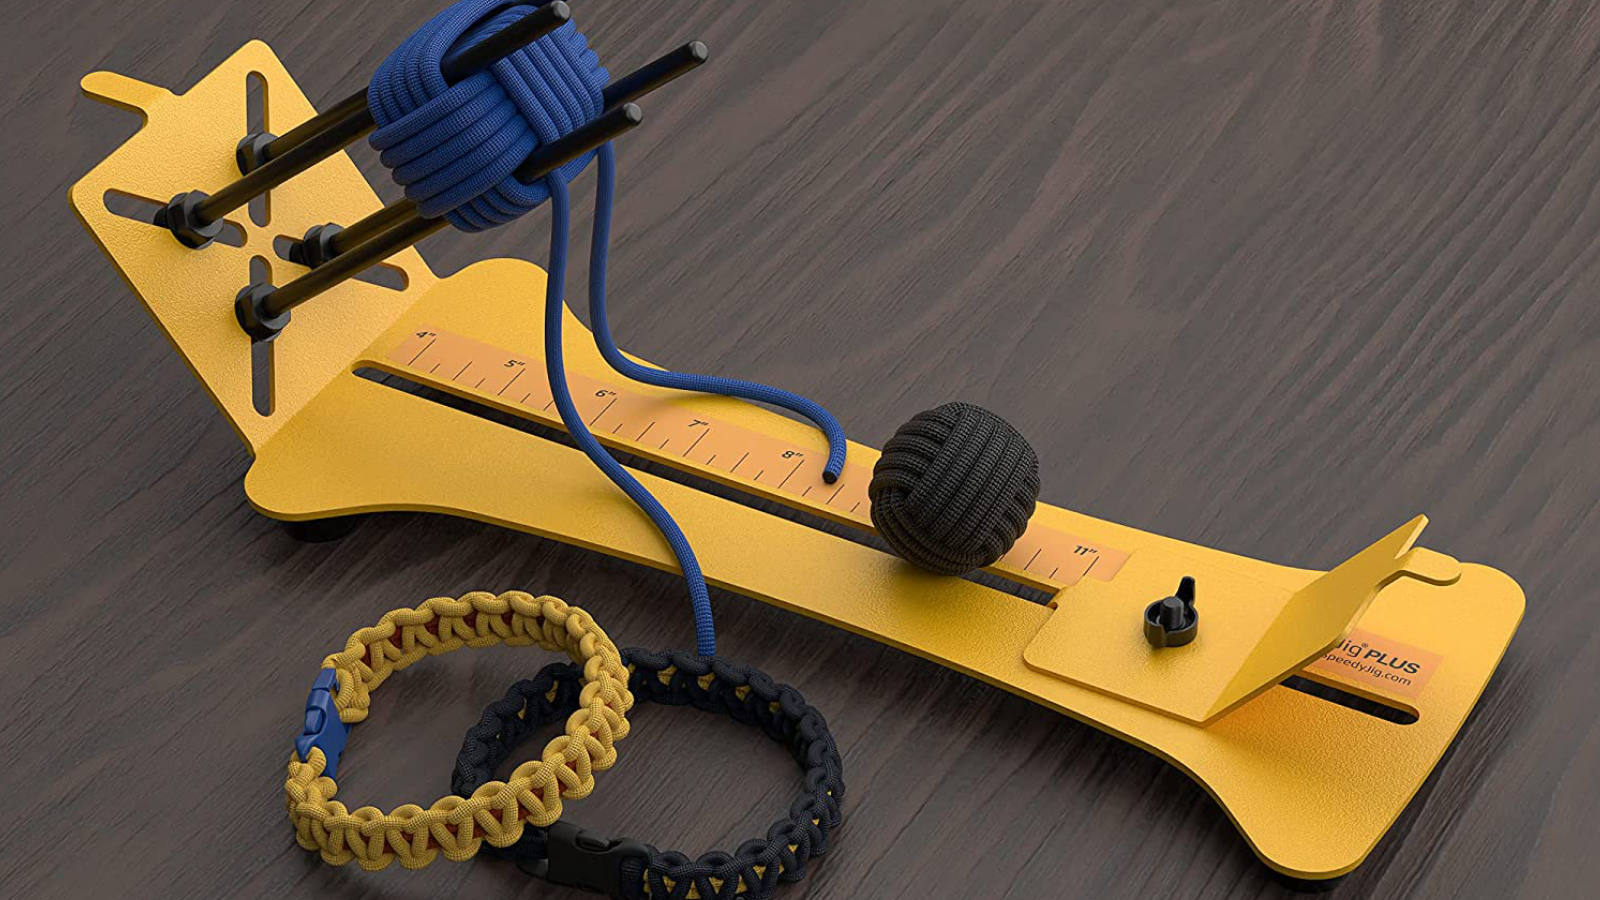 SpeedyJig PLUS Paracord Bracelet & Monkey Fist Jig Kit